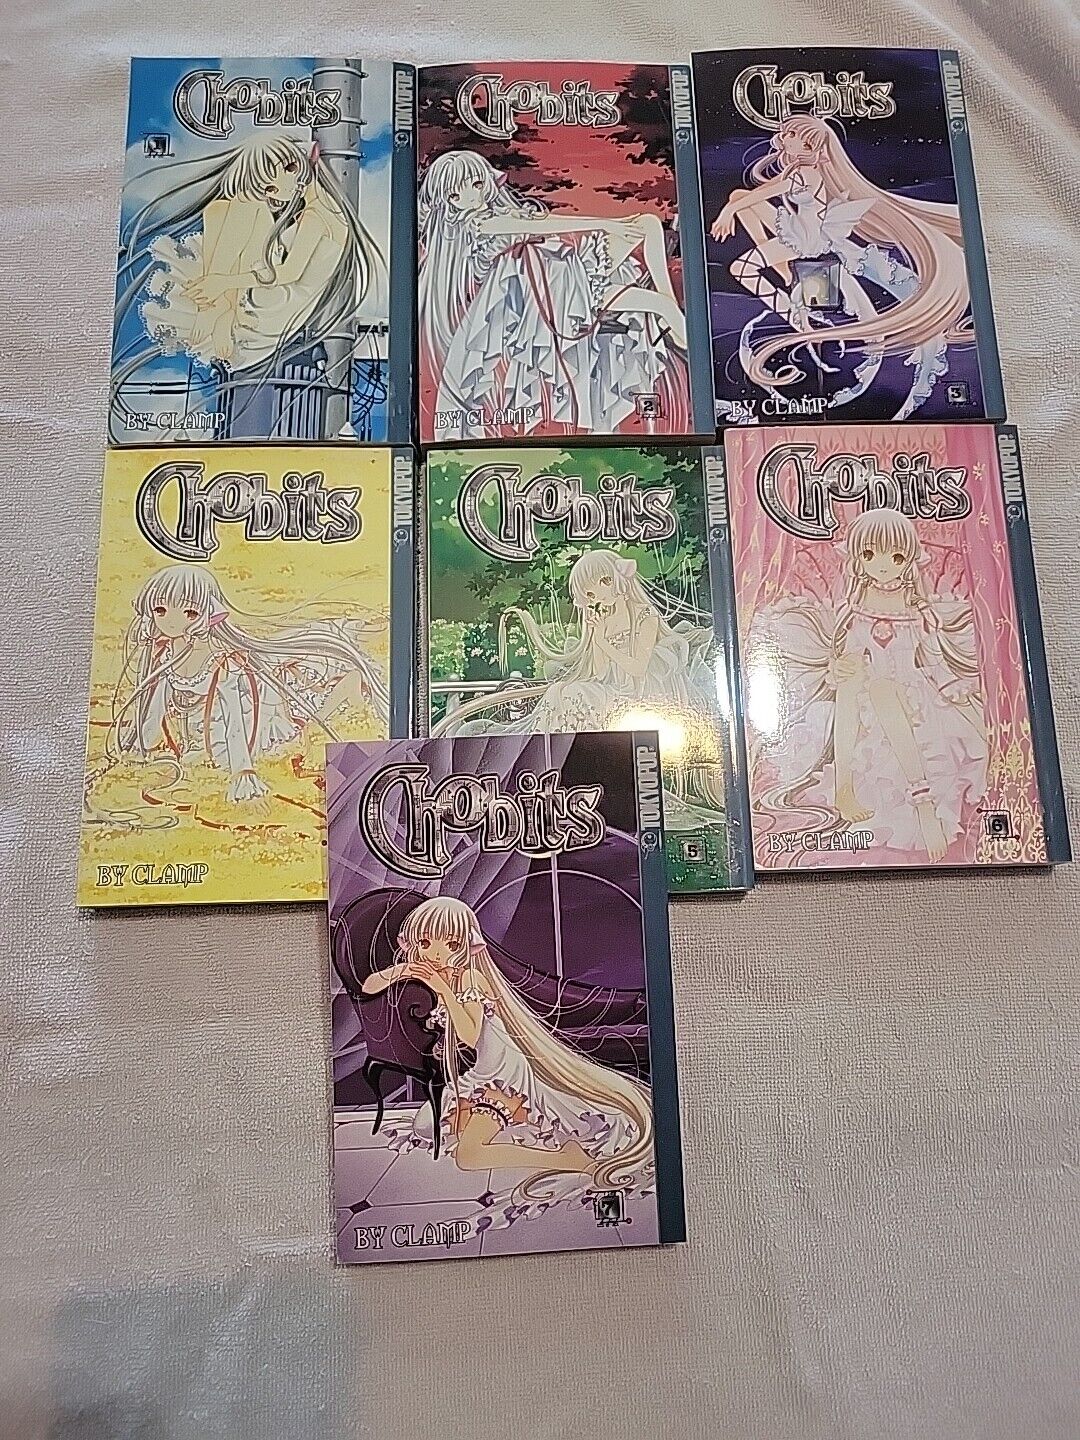 Chobits  Manga Lot Volumes 1-7 Tokyopop Clamp Paperback Book Sets Anime